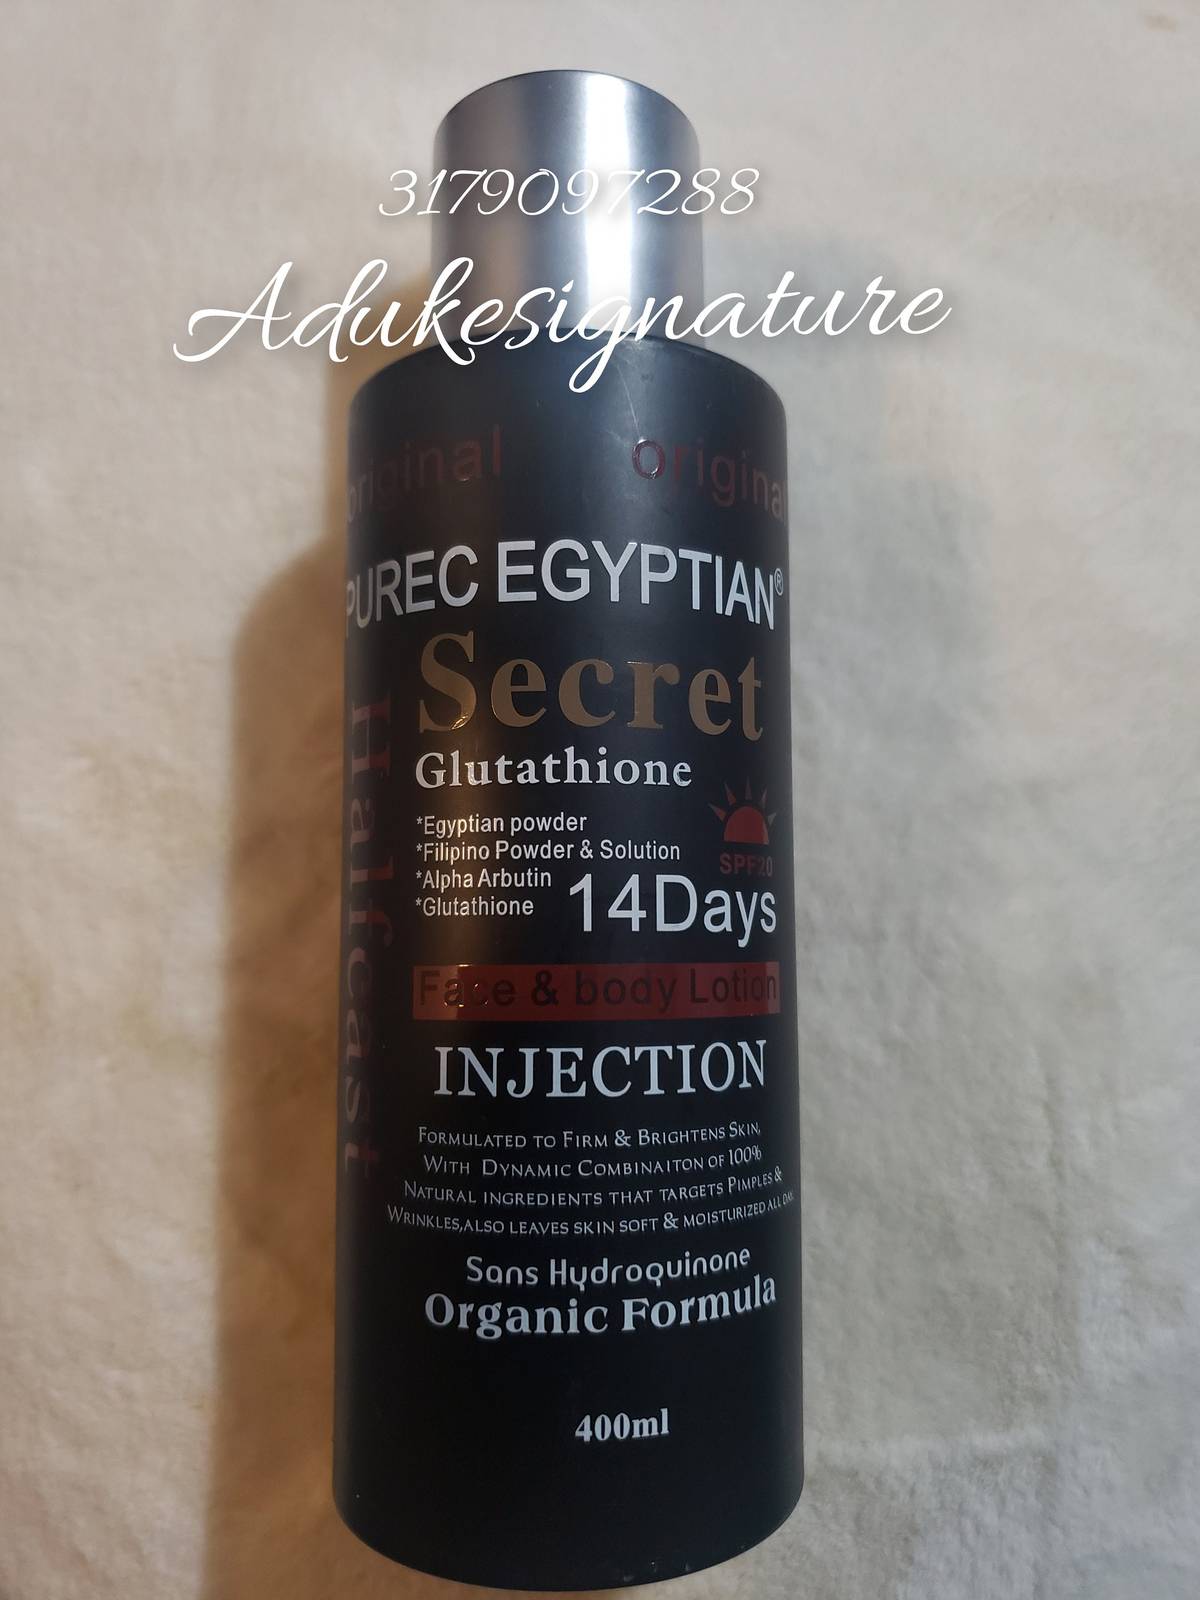 Original purec Egyptian secret half cast Glutathione injection face and body lot